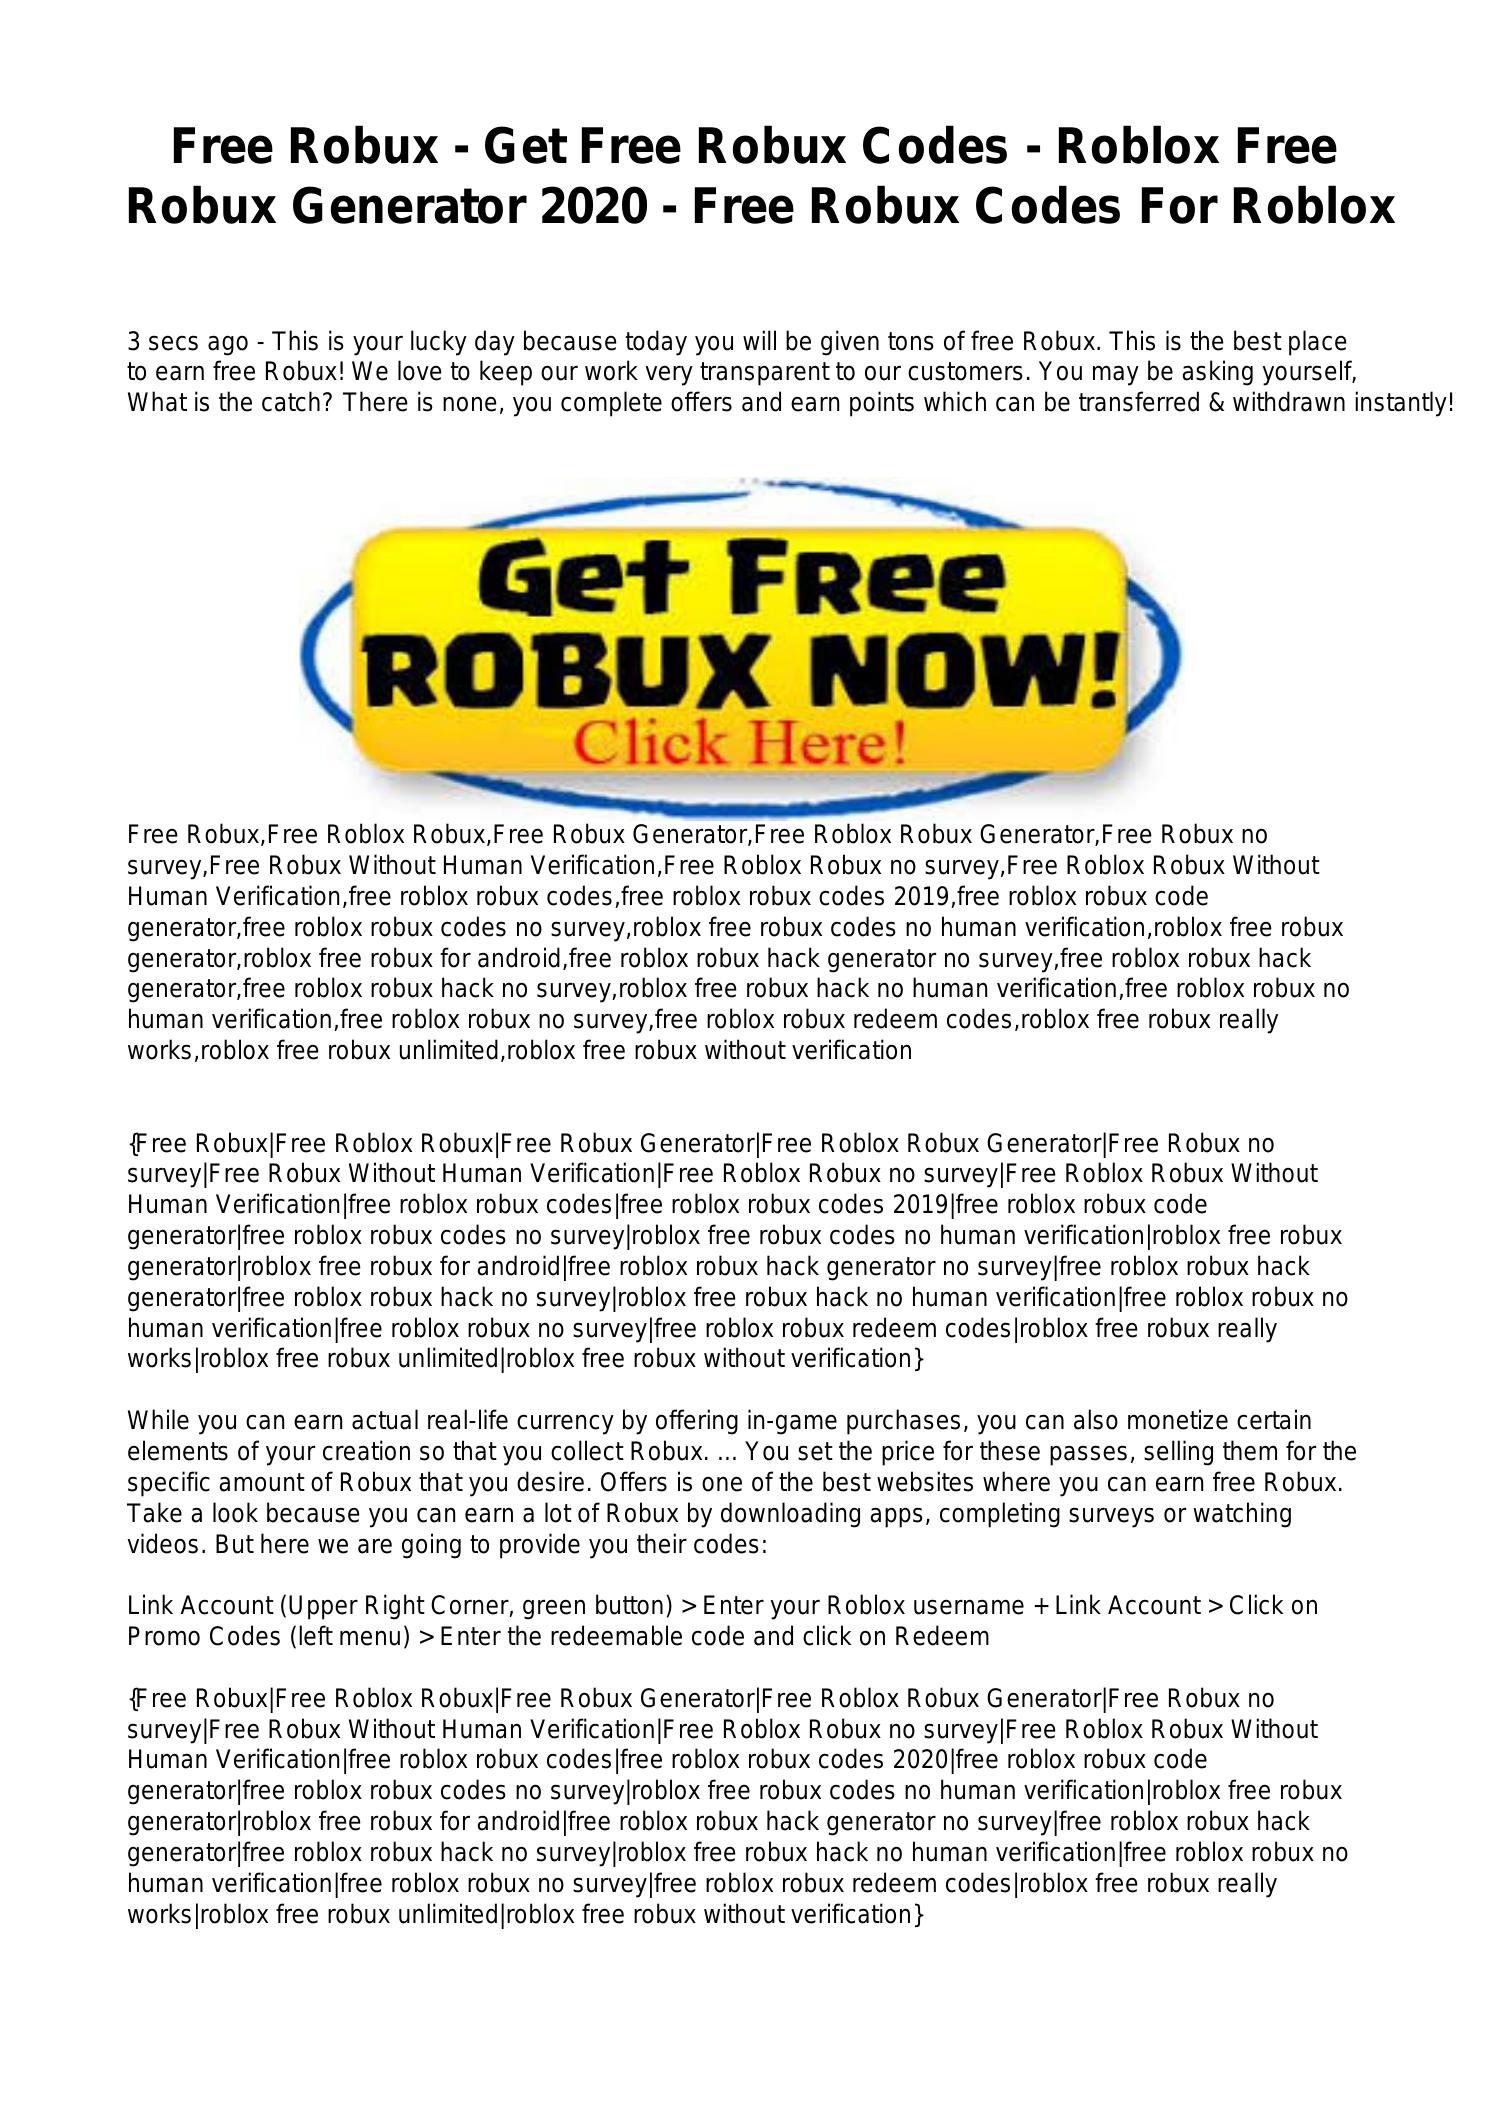 Free Robux Get Free Robux Codes Roblox Free Robux Generator